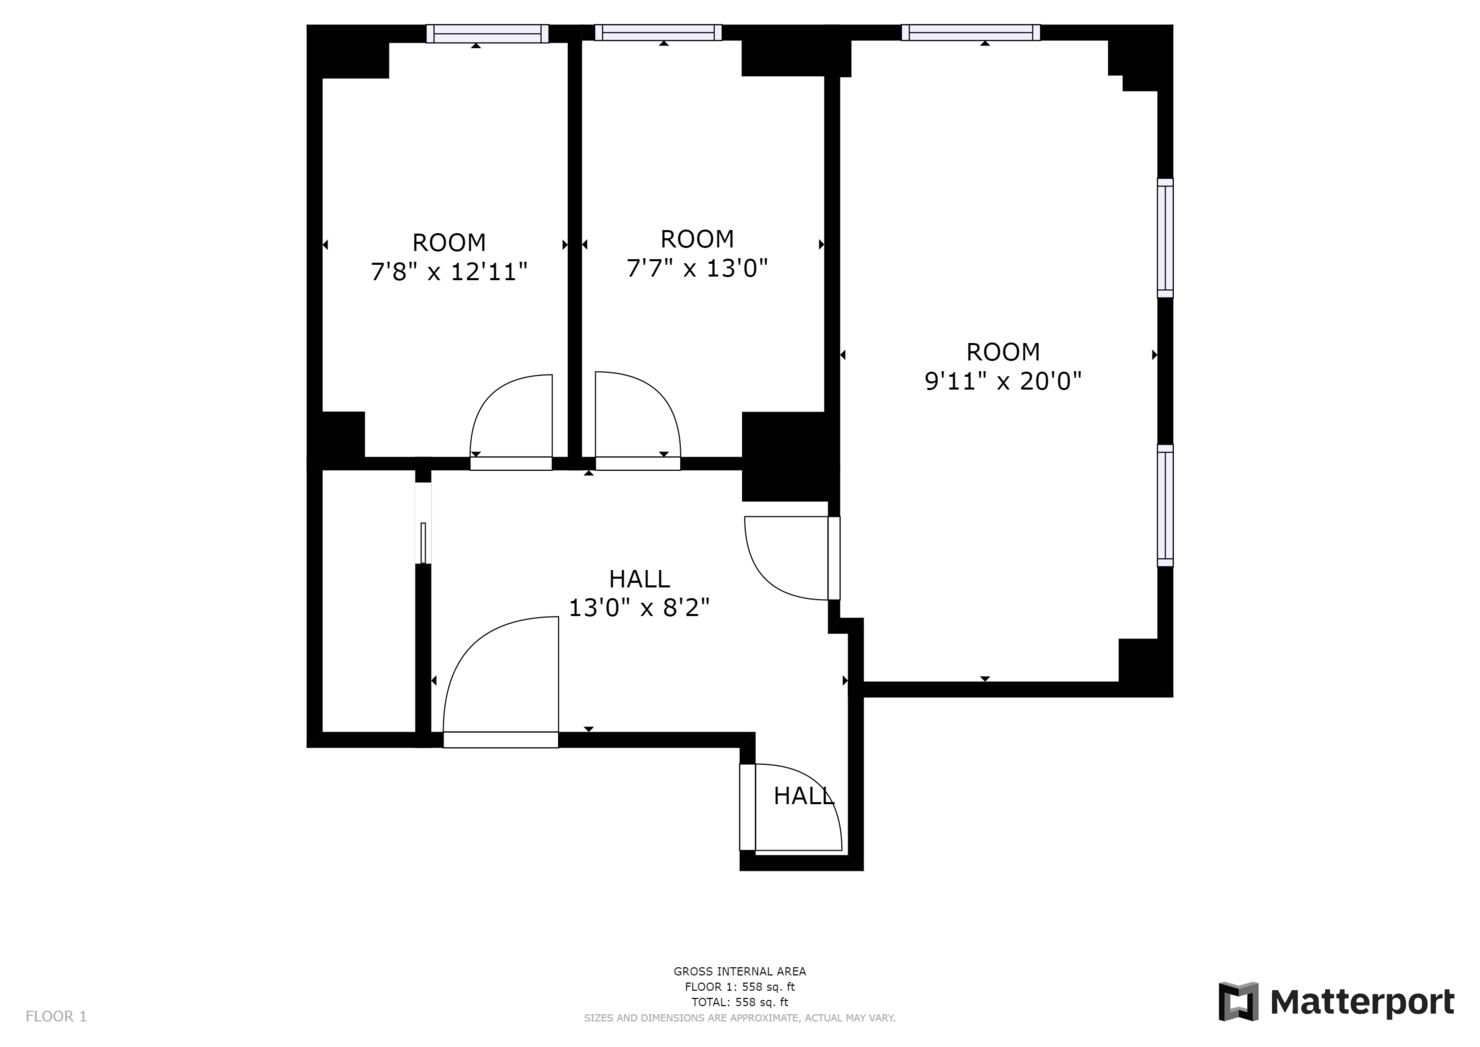 501 Fifth Avenue Office Space - Floorplan